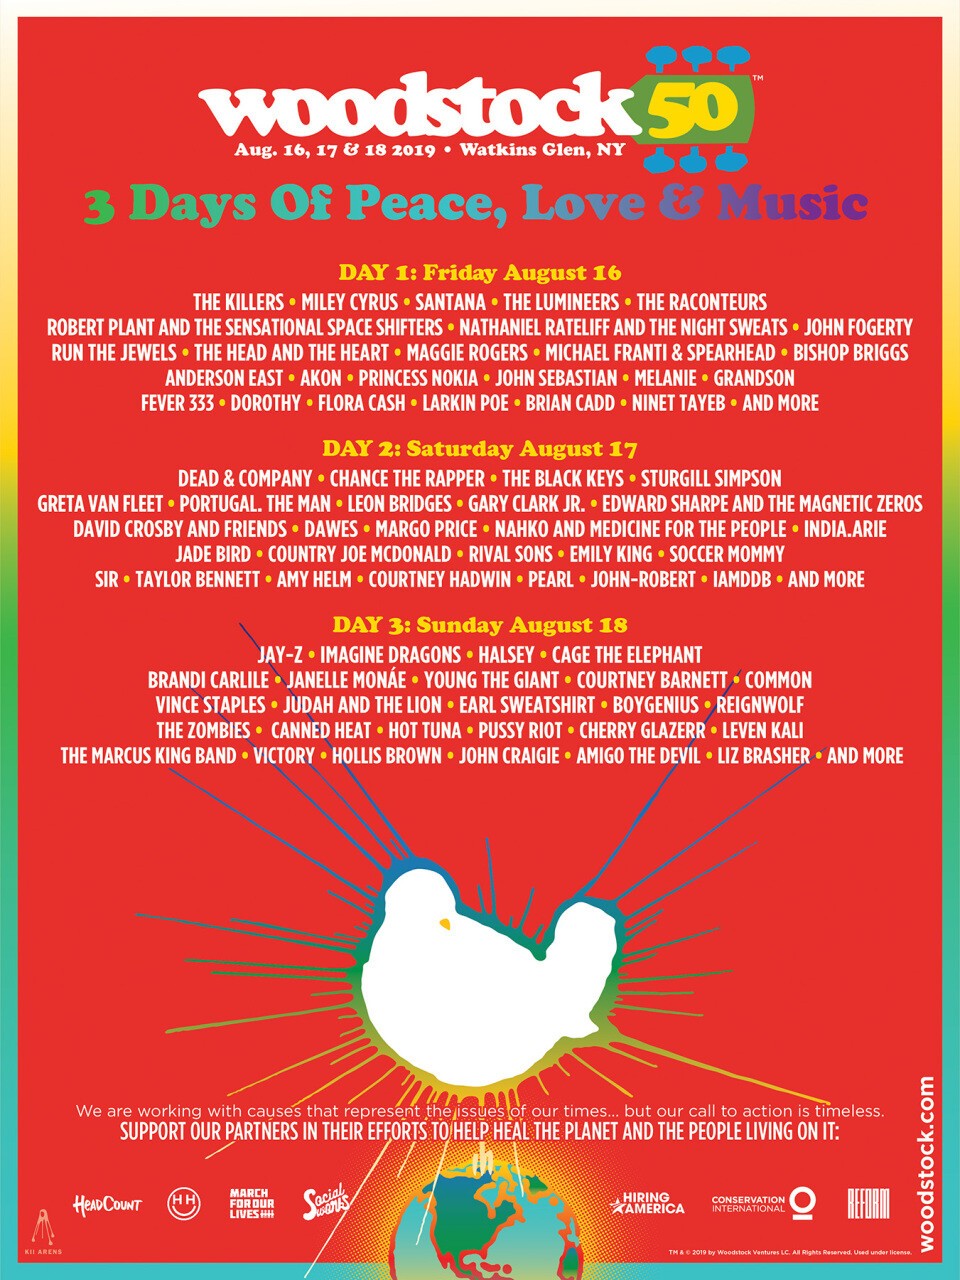 Iflyer 伝説のフェス ウッドストックの50周年を記念したフェス Woodstock 50 がランナップを発表